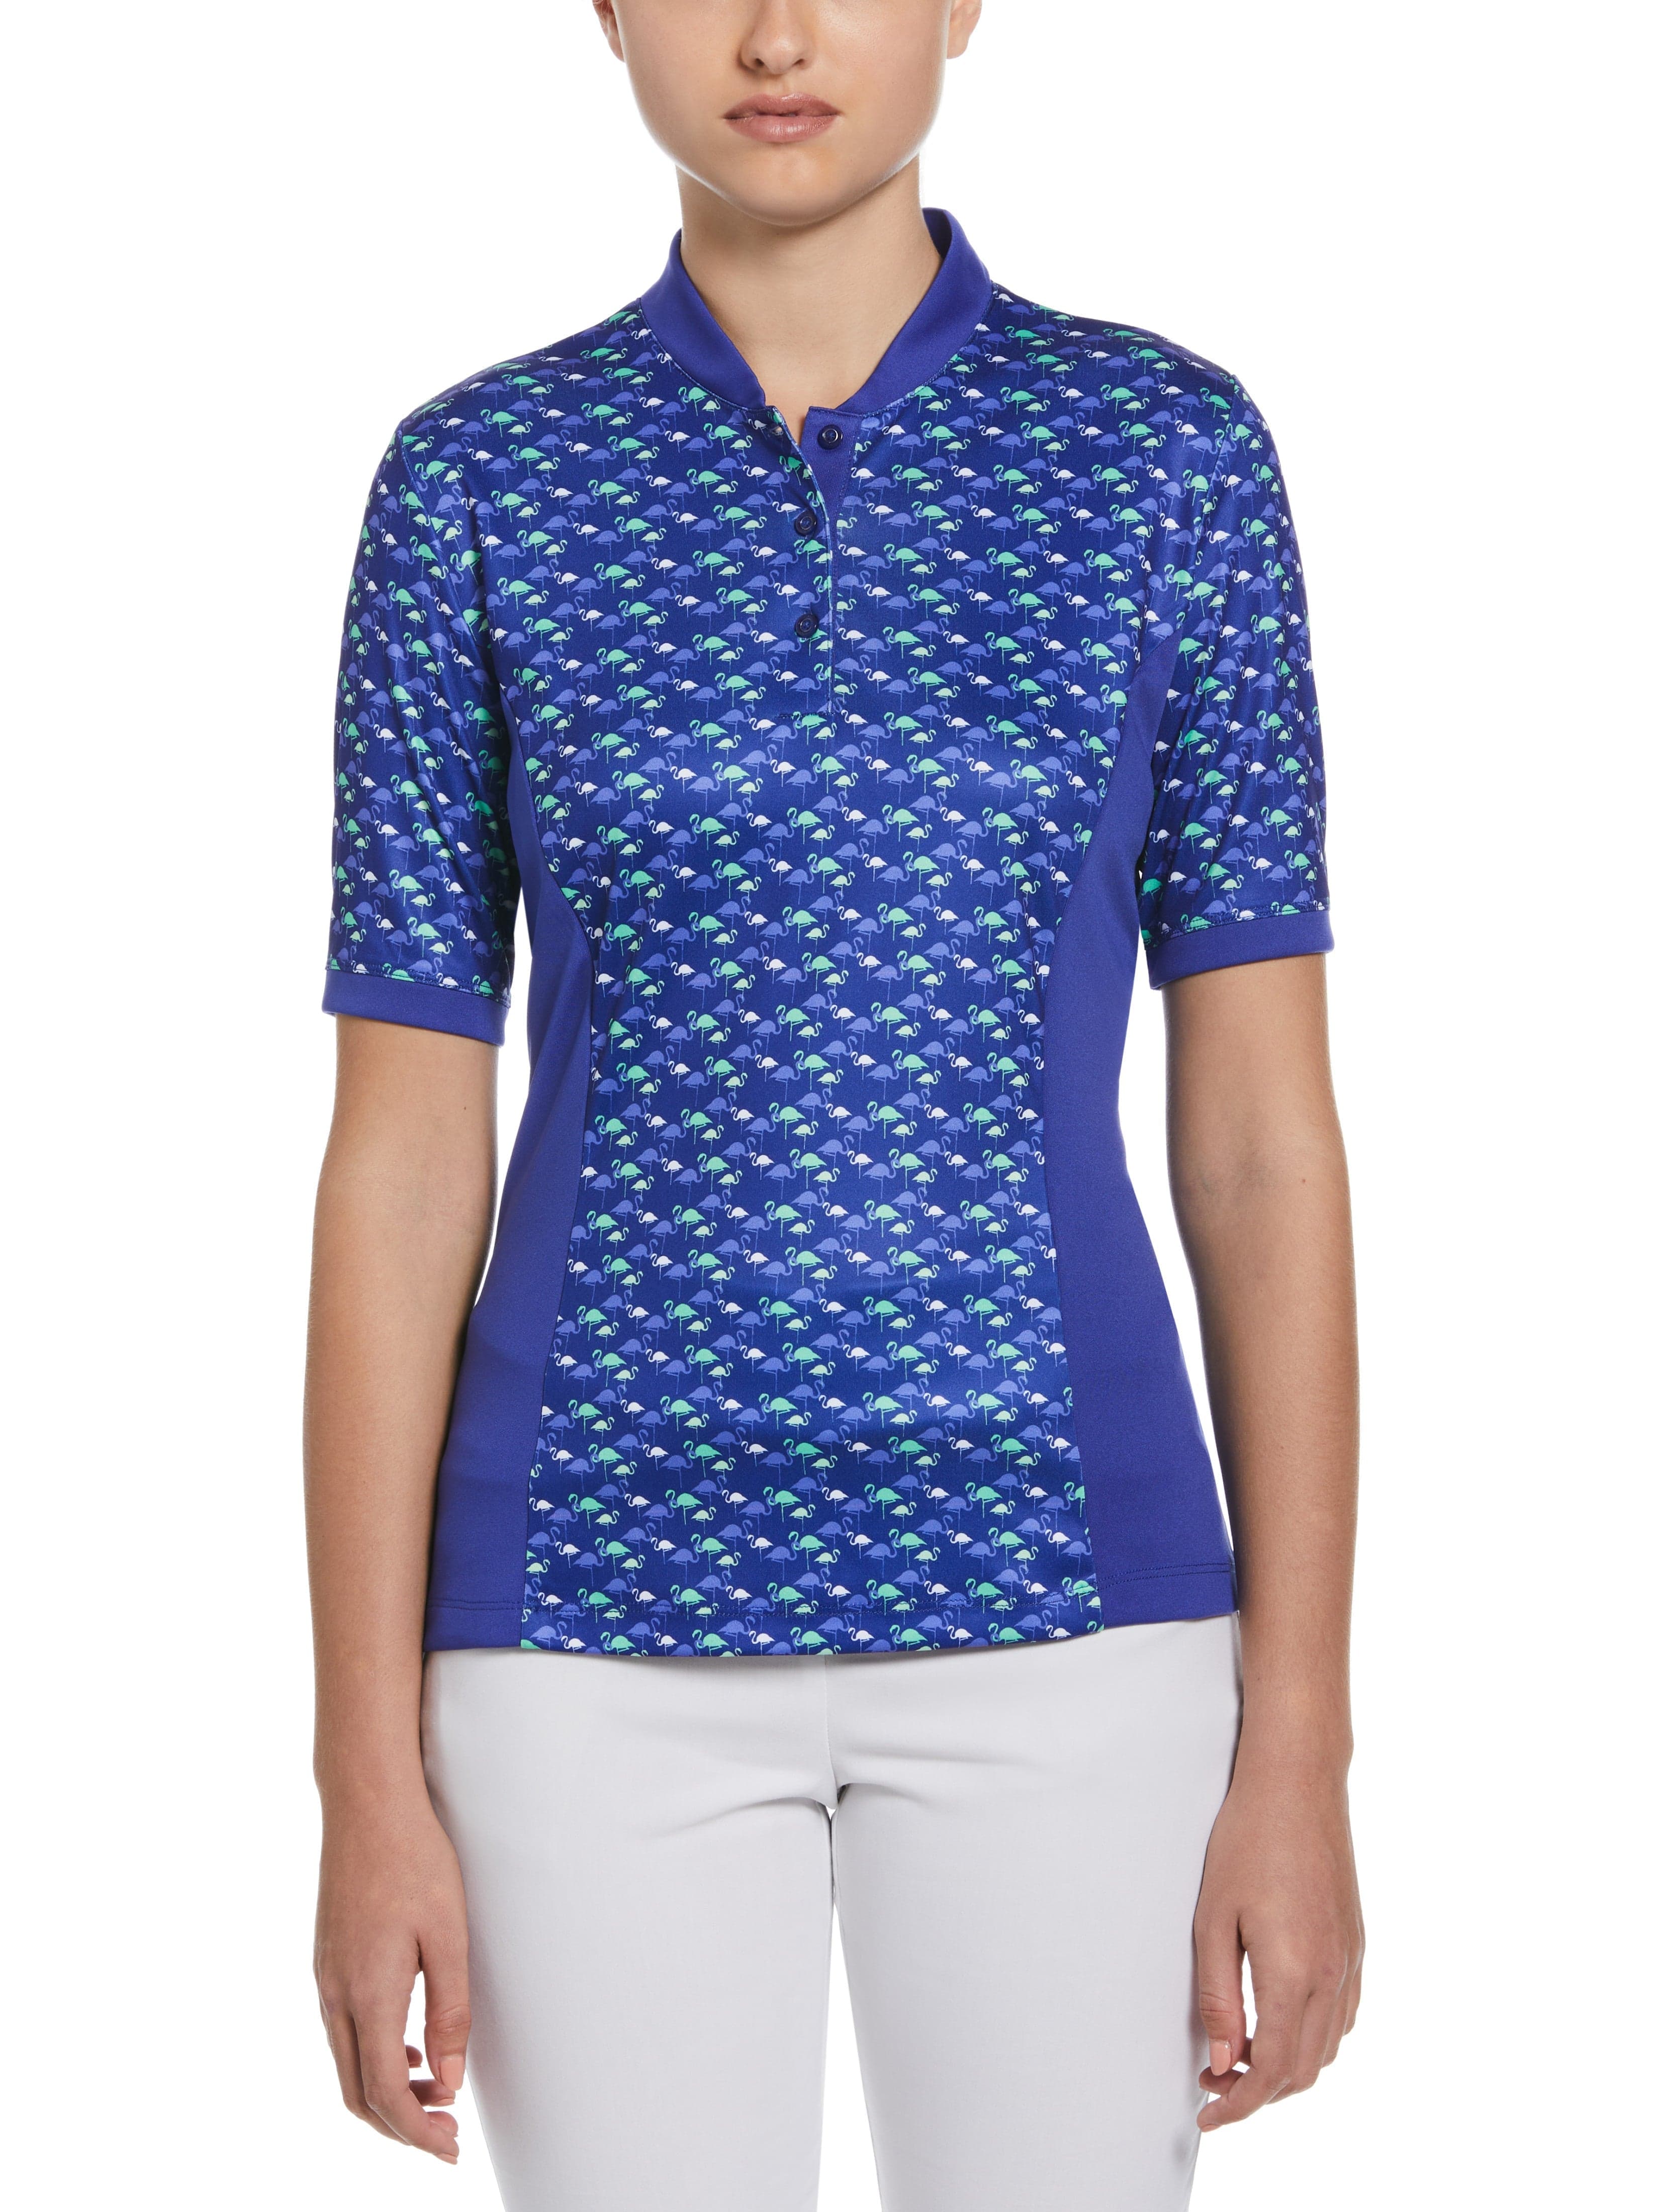 PGA TOUR Apparel Womens Flamingo Print Golf Polo Shirt w/ Baseball Collar, Size Small, Blueing, 100% Polyester | Golf Apparel Shop